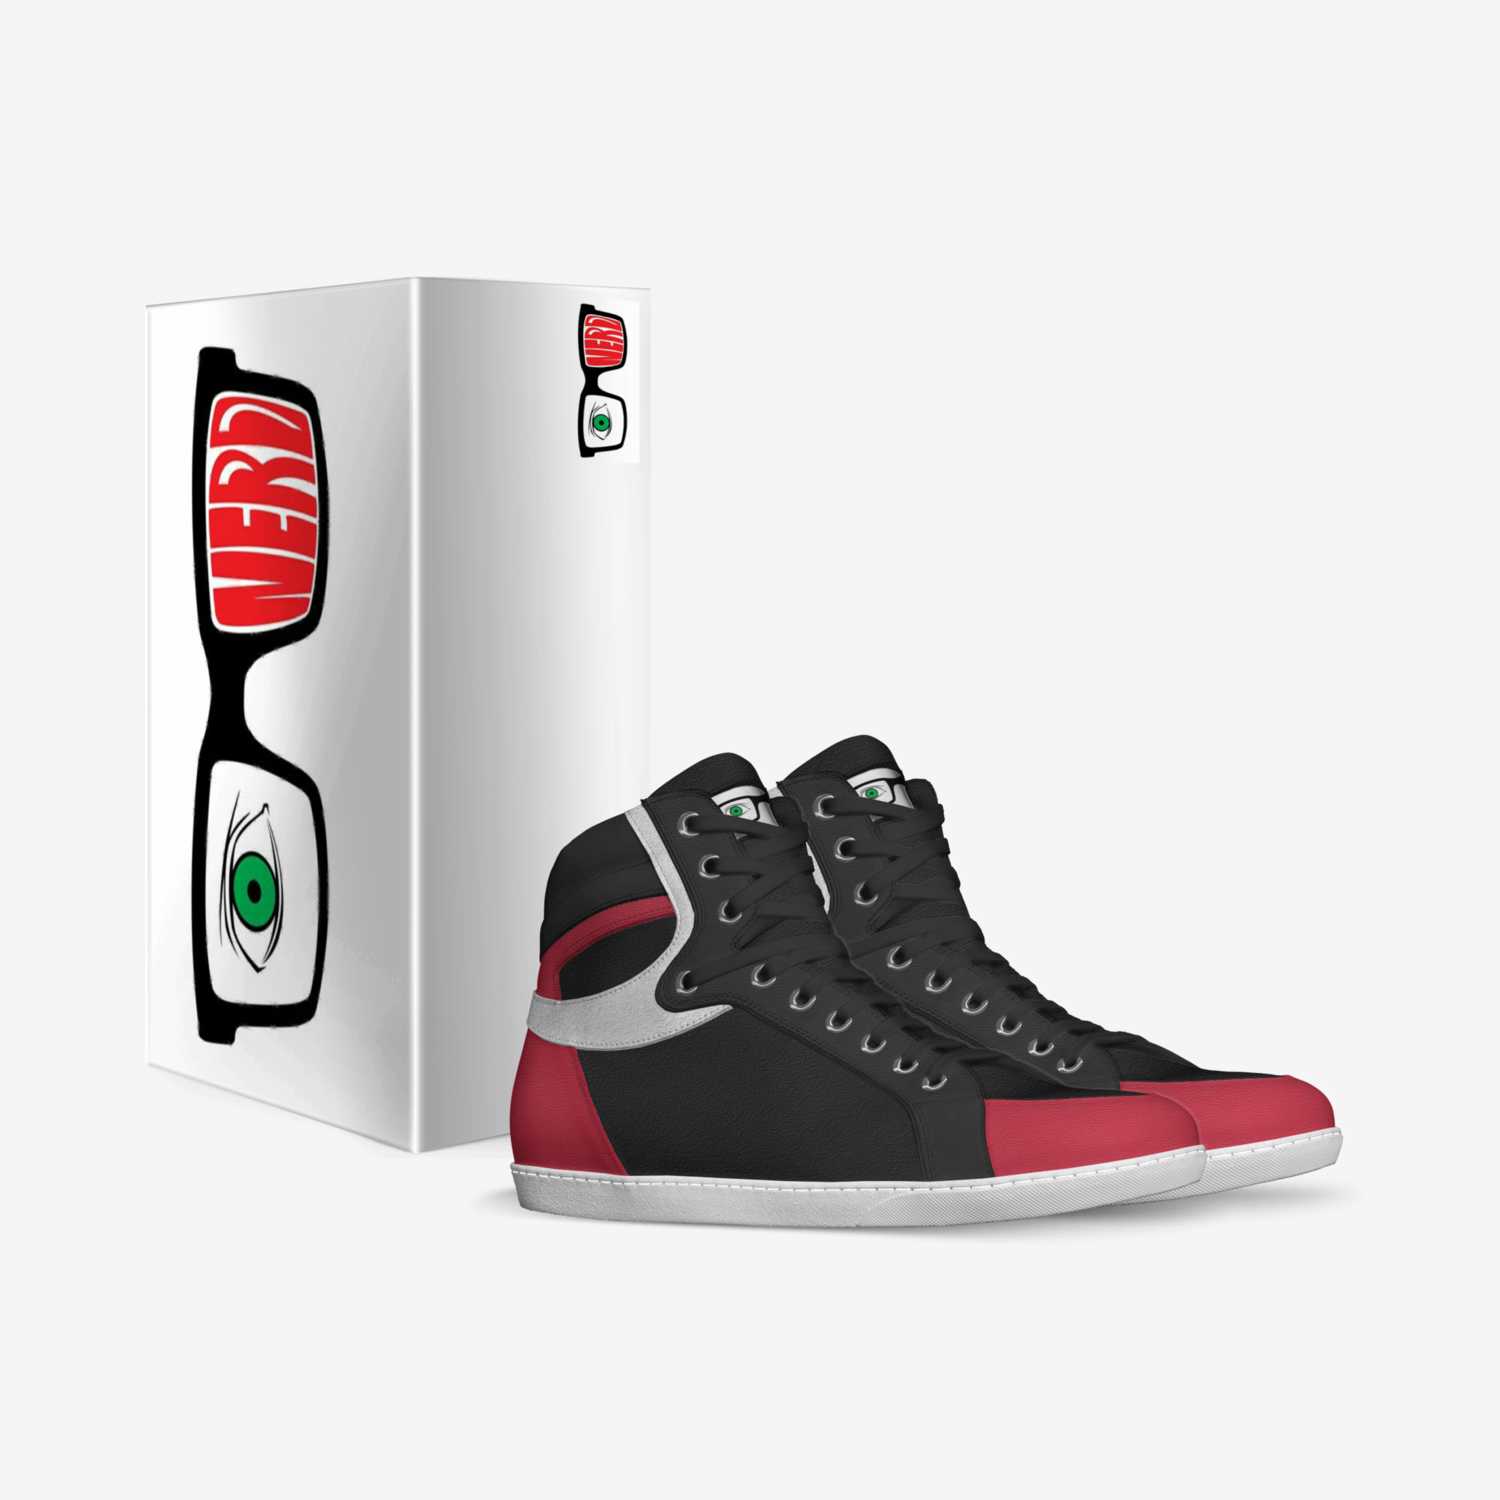 I.N.E.R.D custom made in Italy shoes by I.n.e.r.d Black | Box view